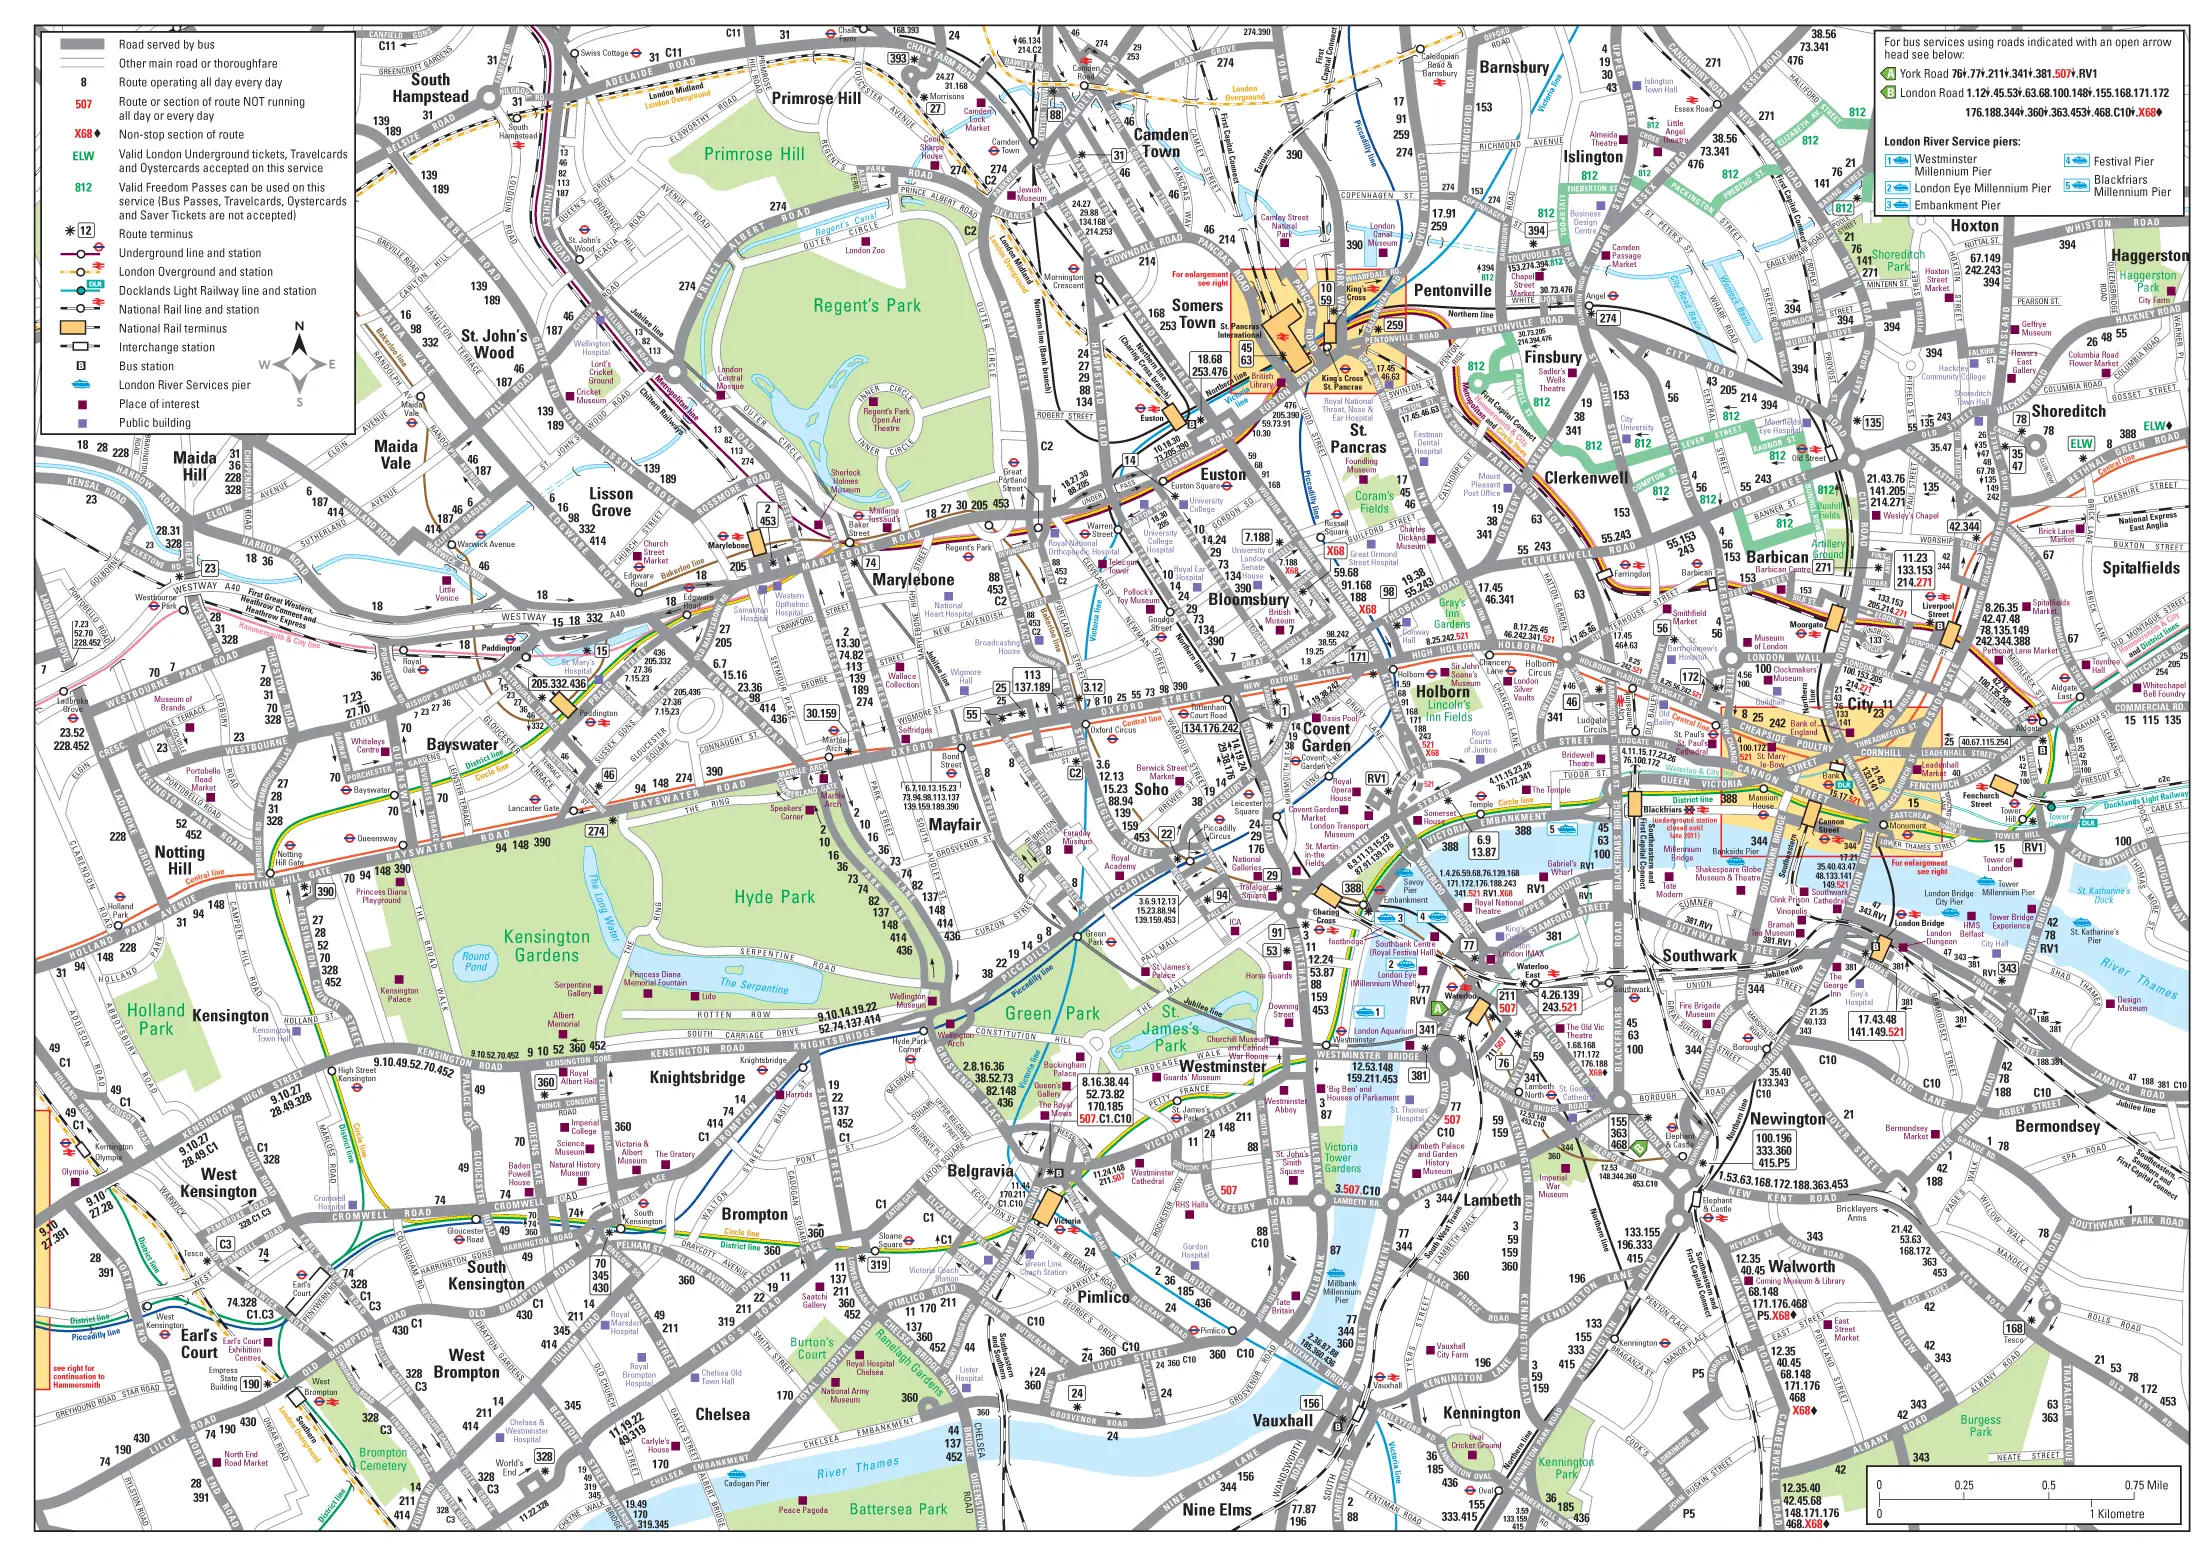 London Detailed Road Map - MapSof.net